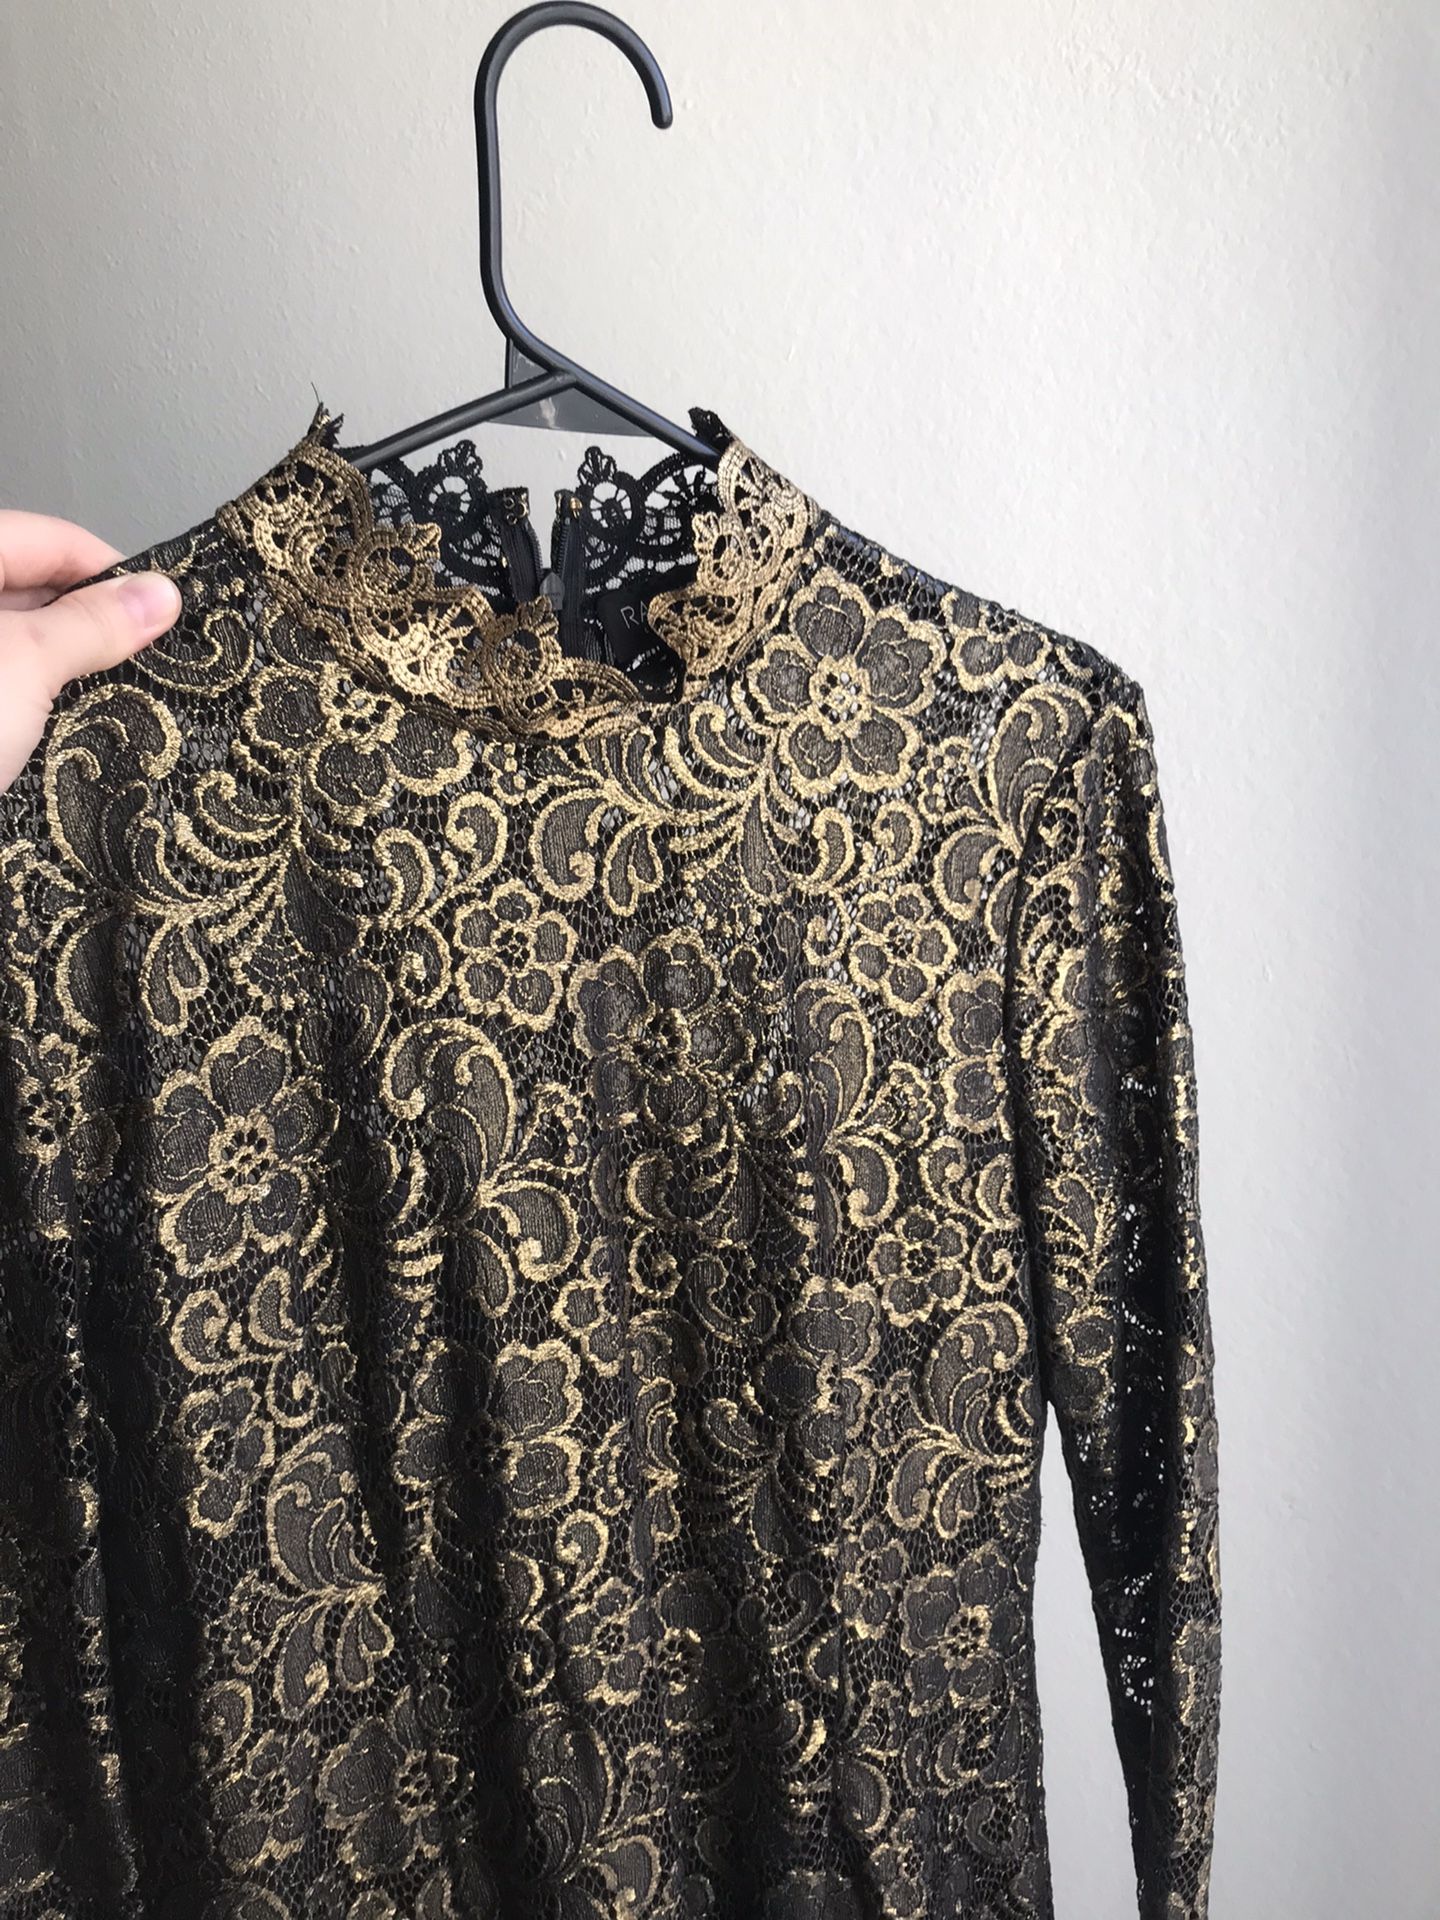 Rachel Zoe black & gold Midi dress Size 6